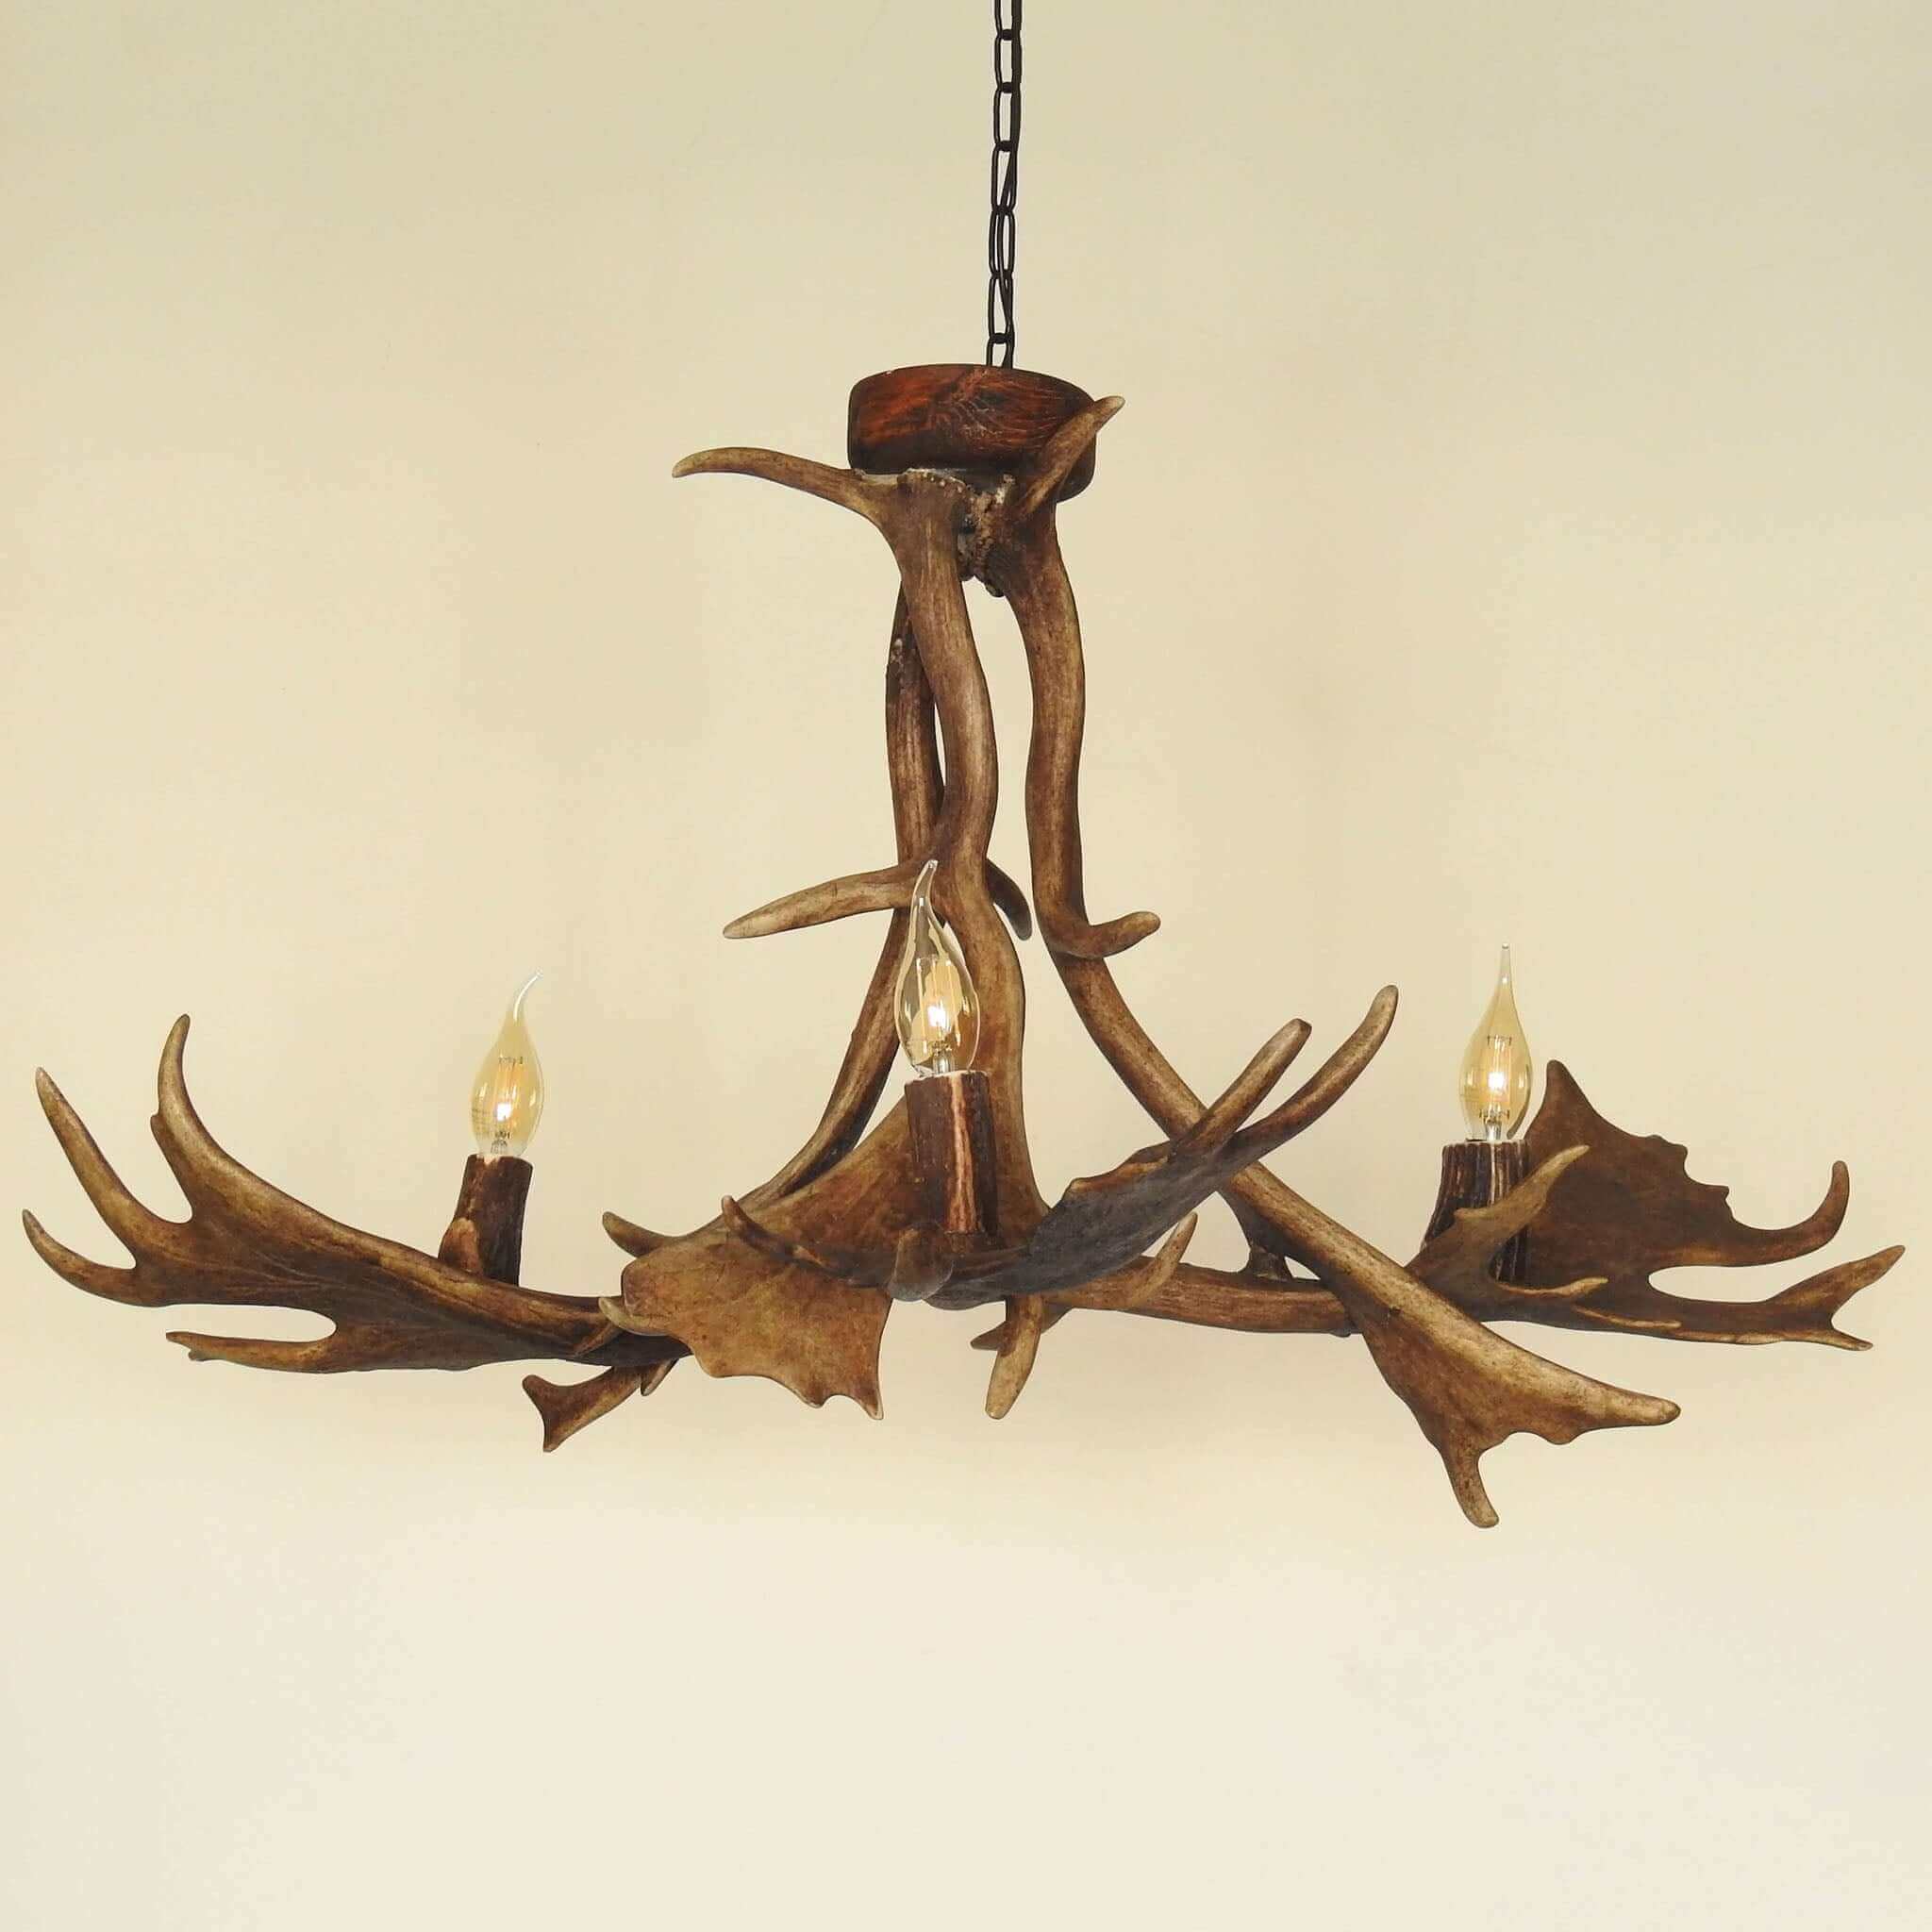 Real antler chandelier made of fallow deer antlers.